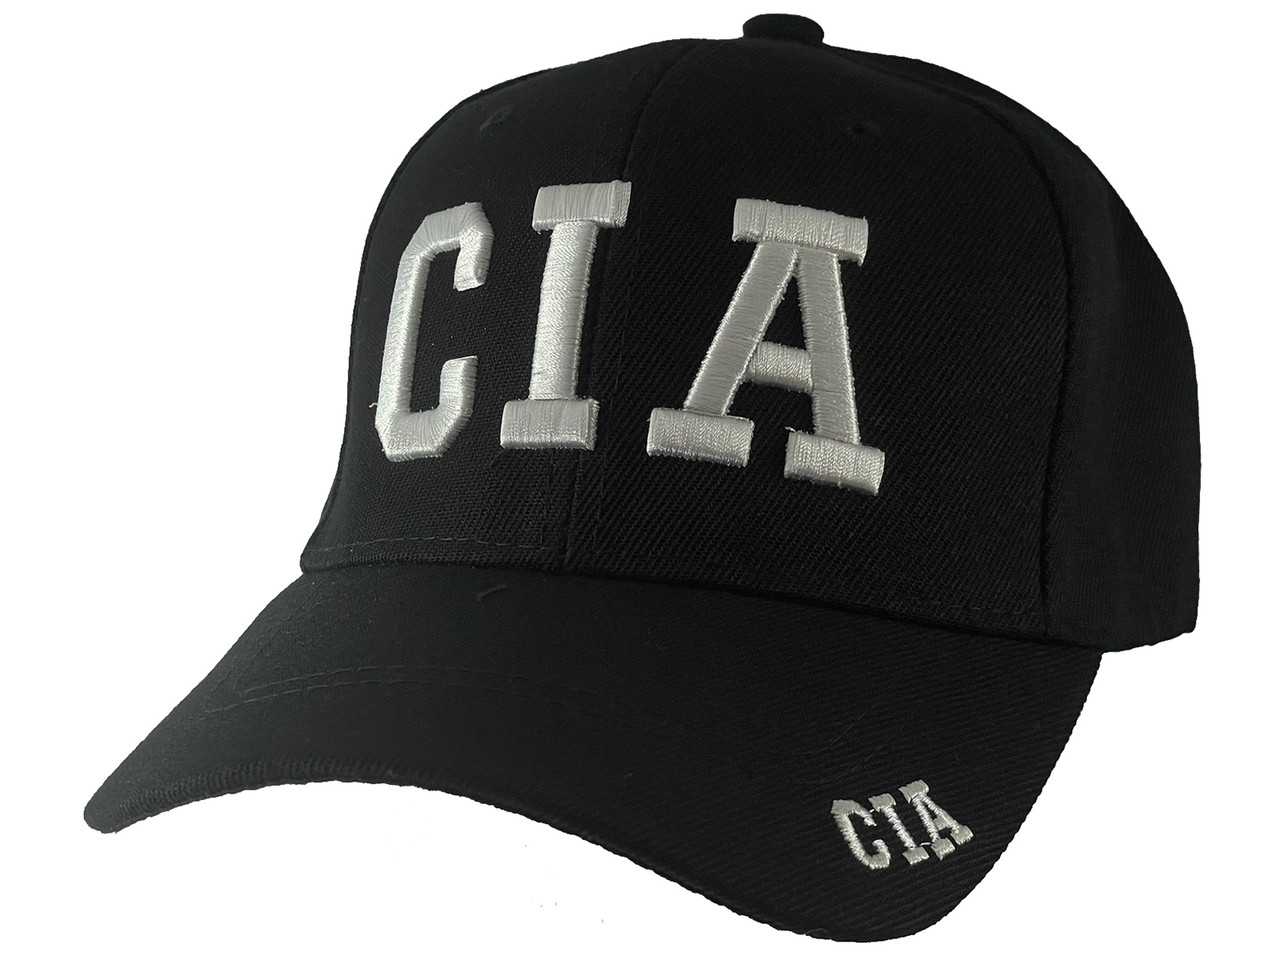 Law Enforecement CIA Adjustable Baseball Cap - Gravity Trading